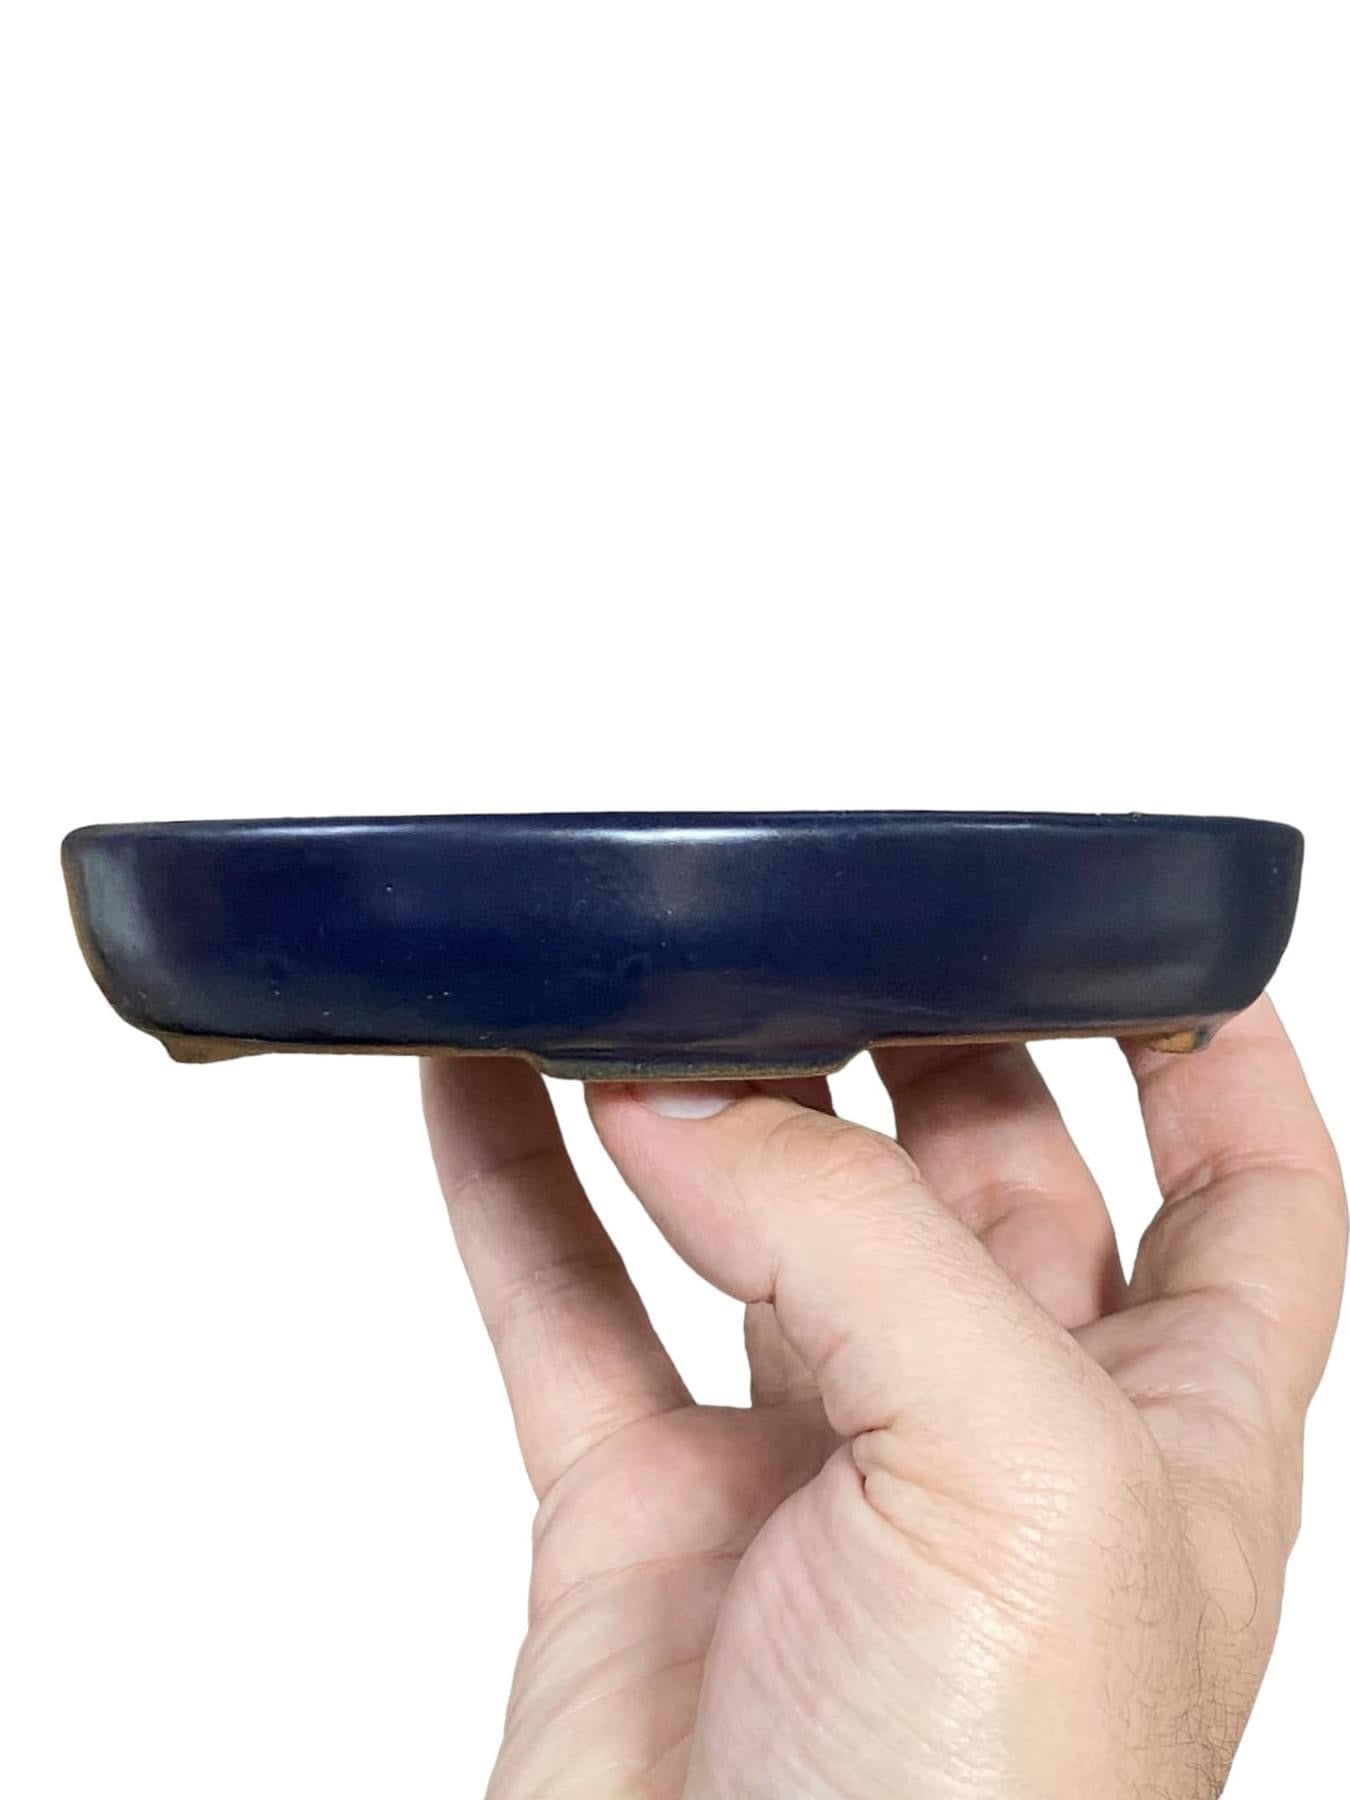 Yamafusa - Ruri Blue Glazed Oval Bonsai Pot